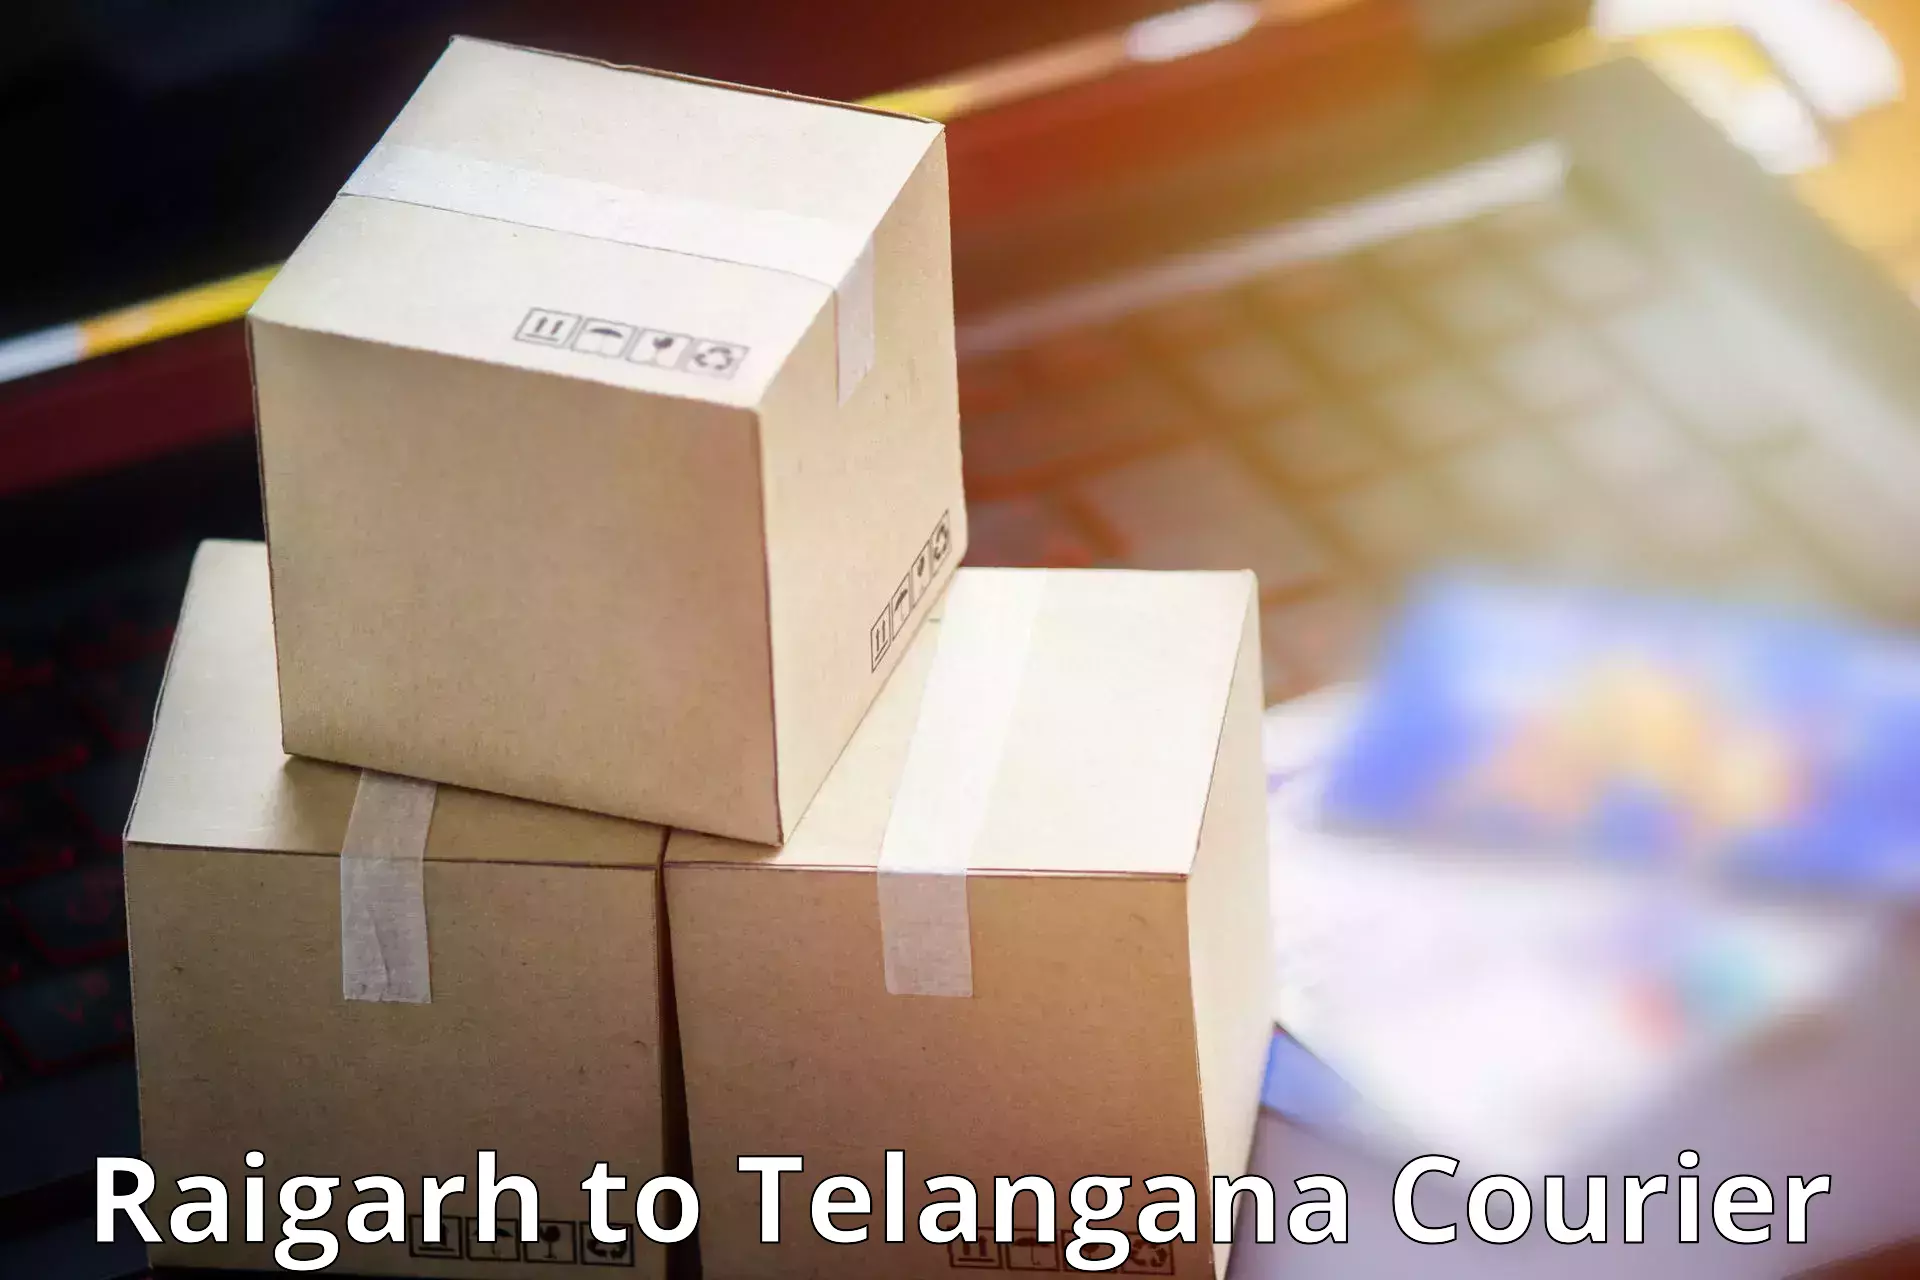 Courier service innovation Raigarh to Patancheru